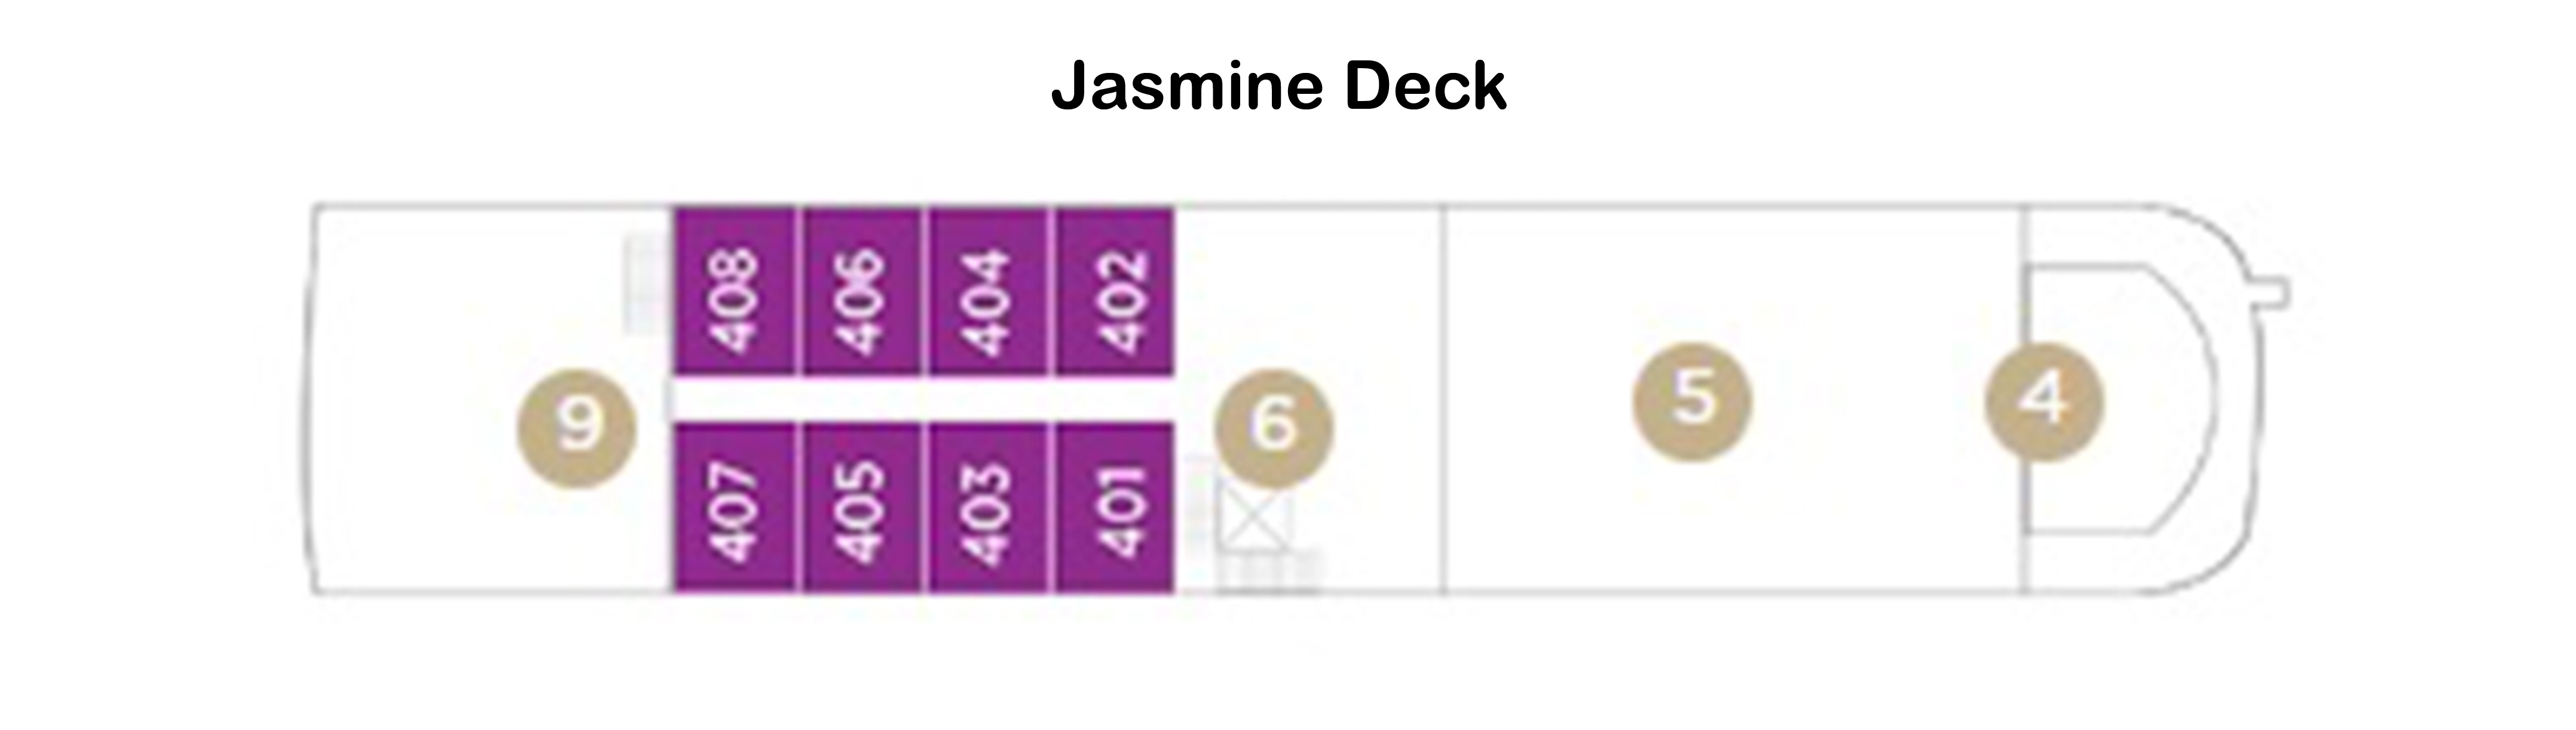 Jasmine Deck